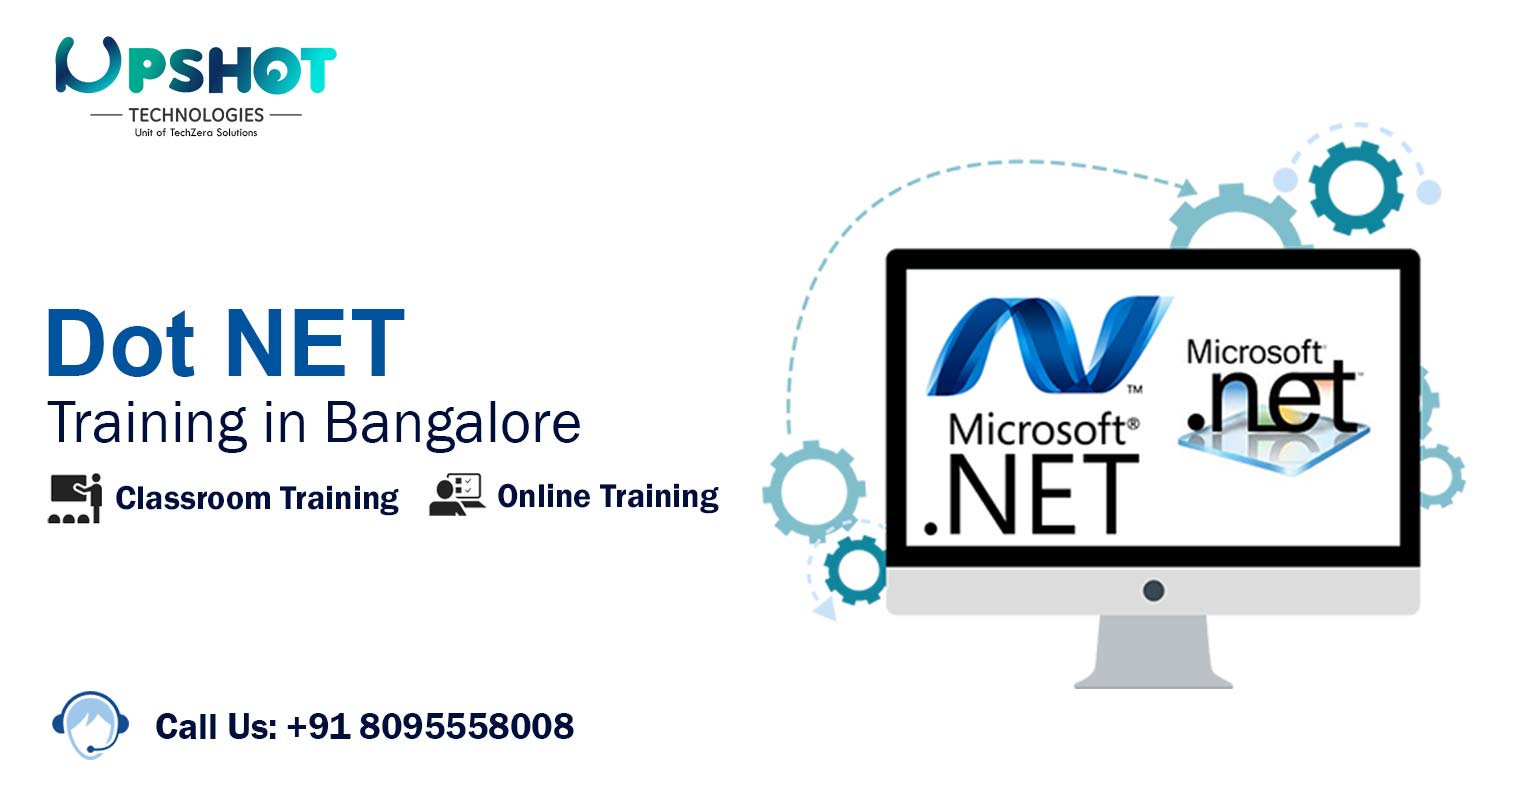 Dot Net Training in bangalore